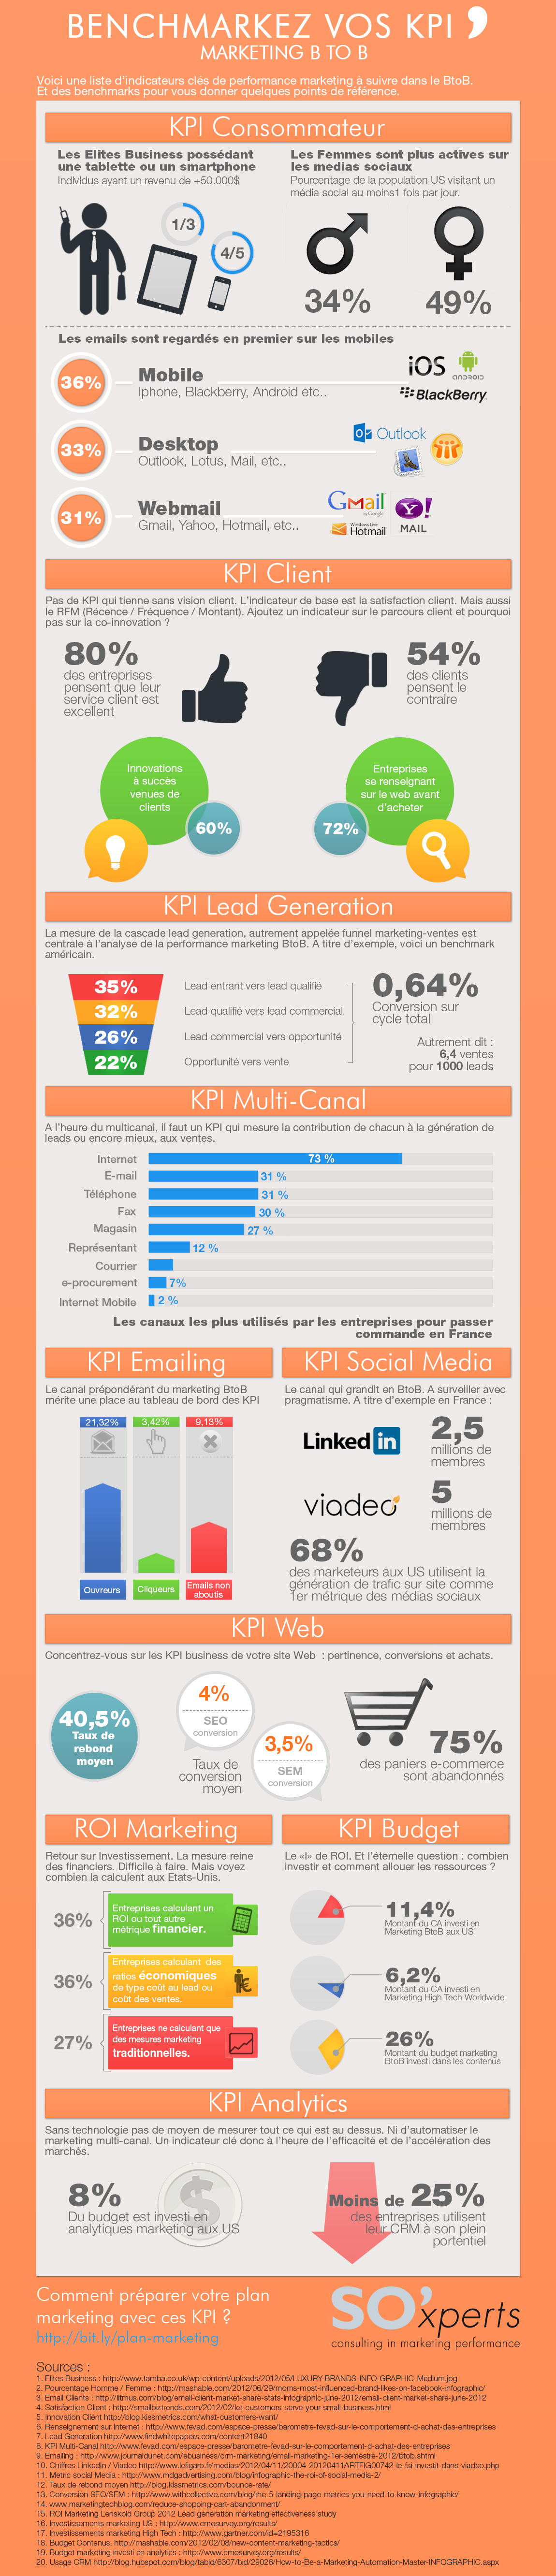 KPI B2B